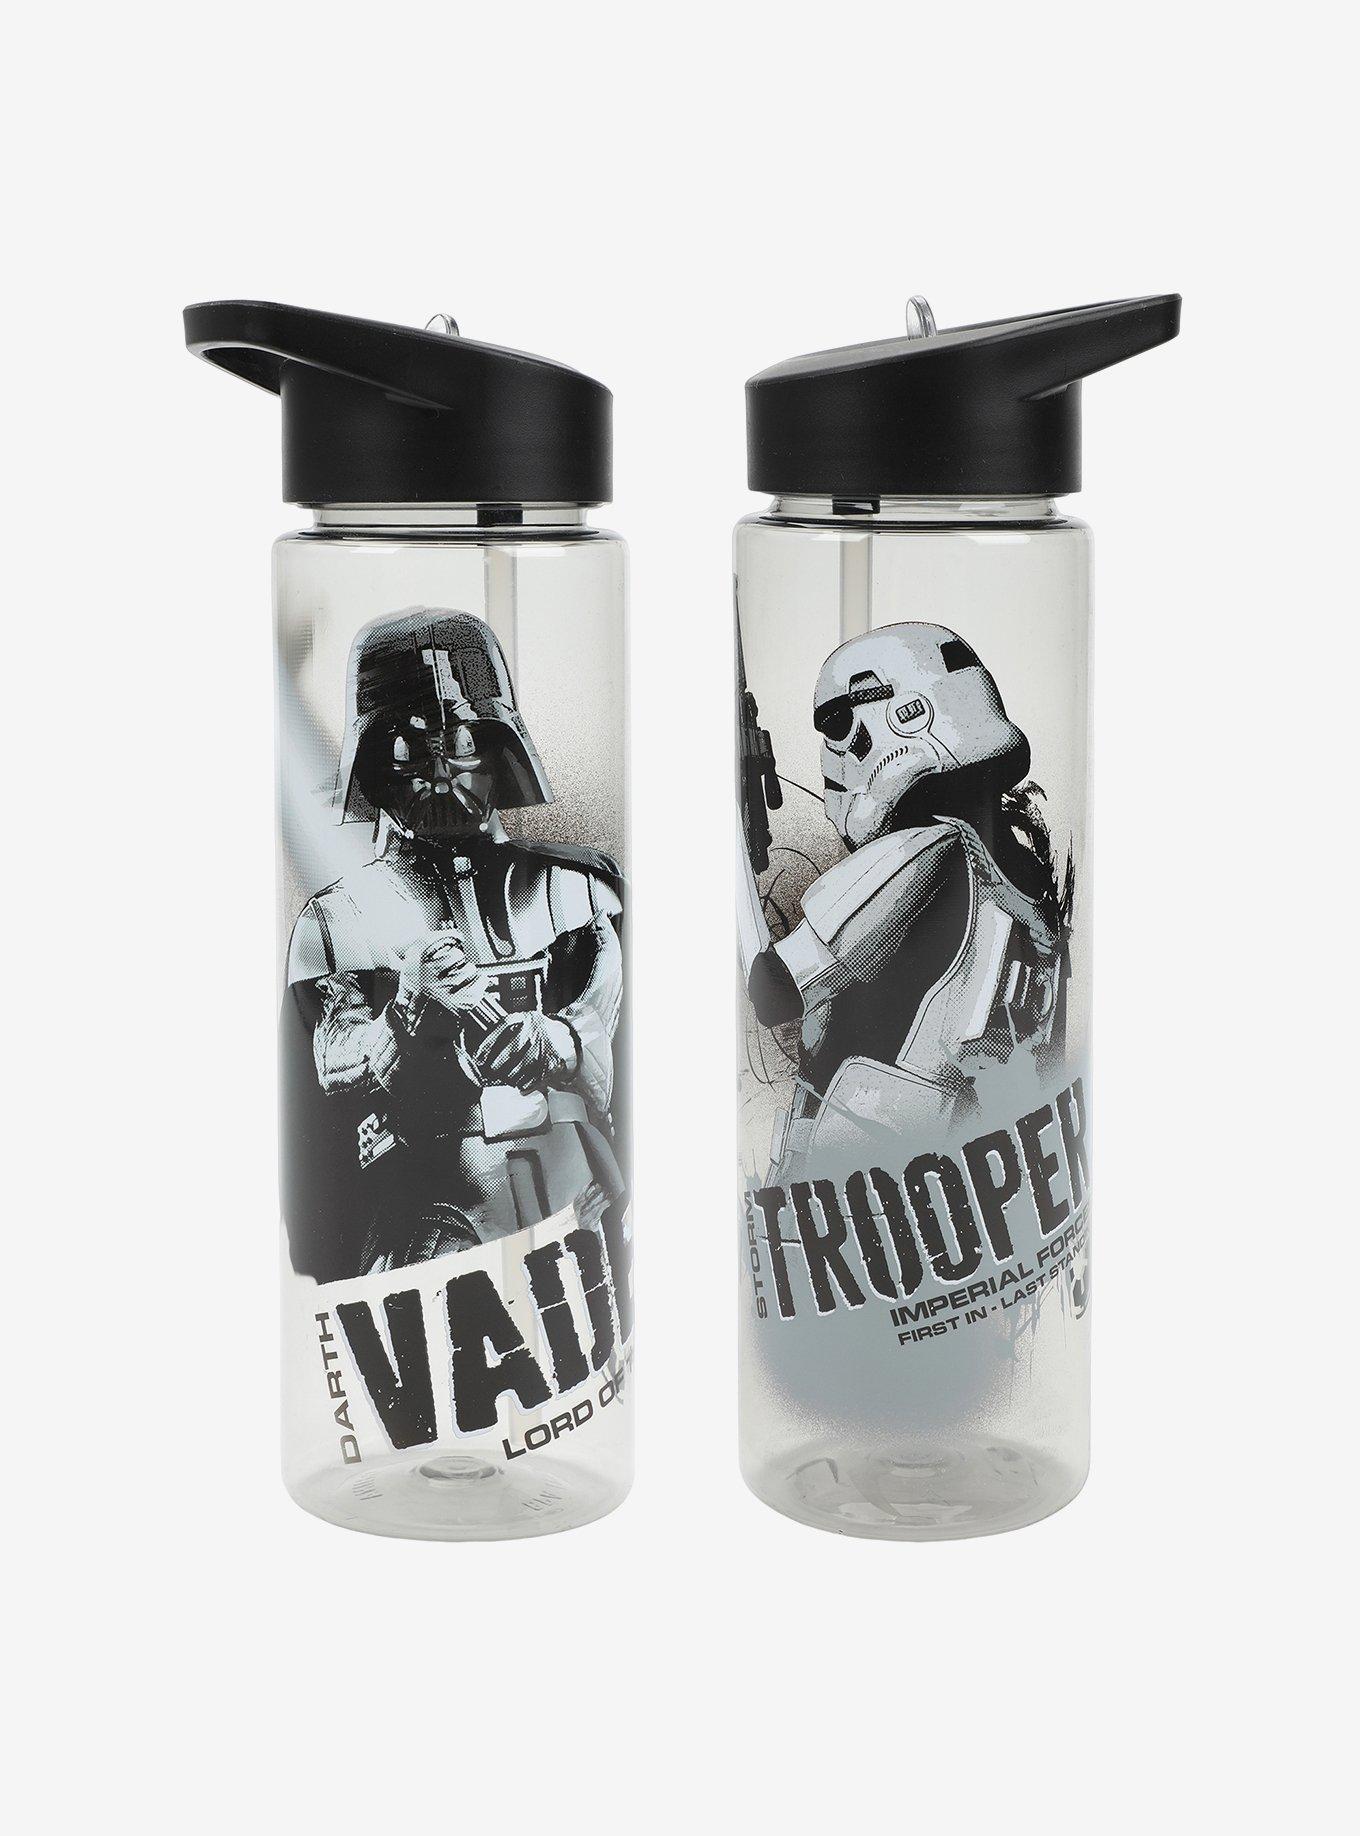 Blender Bottle - Star Wars Pro Series Stormtrooper